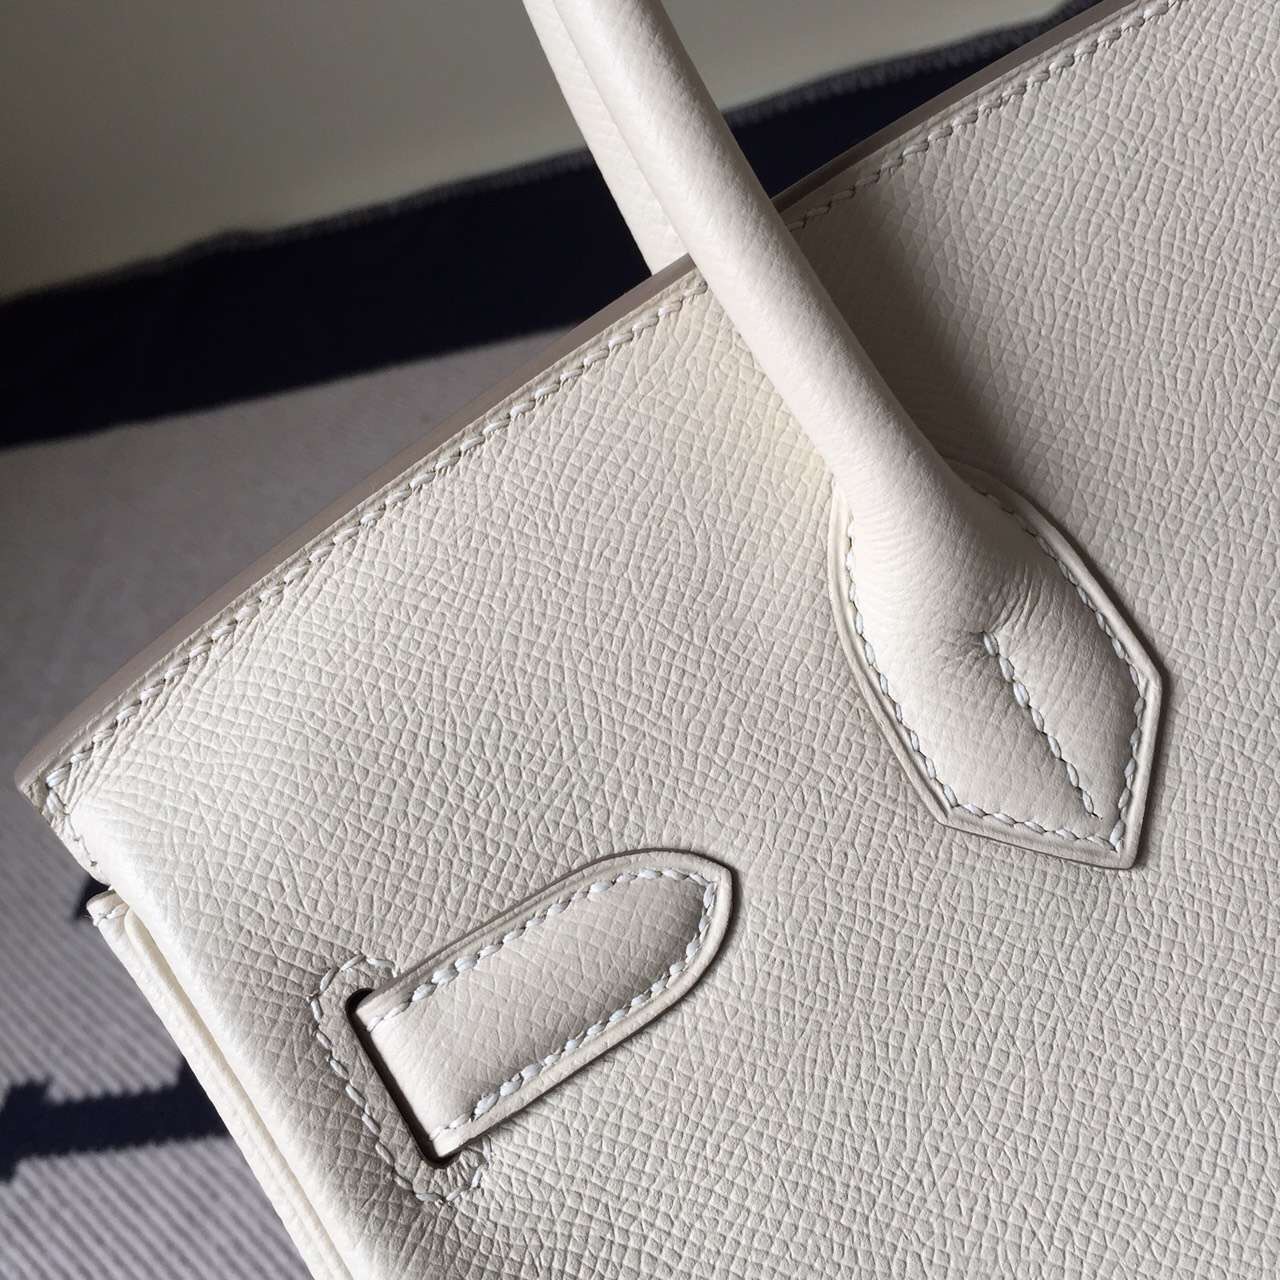 Wholesale Hermes Epsom Leather Birkin Bag30cm in Milk White